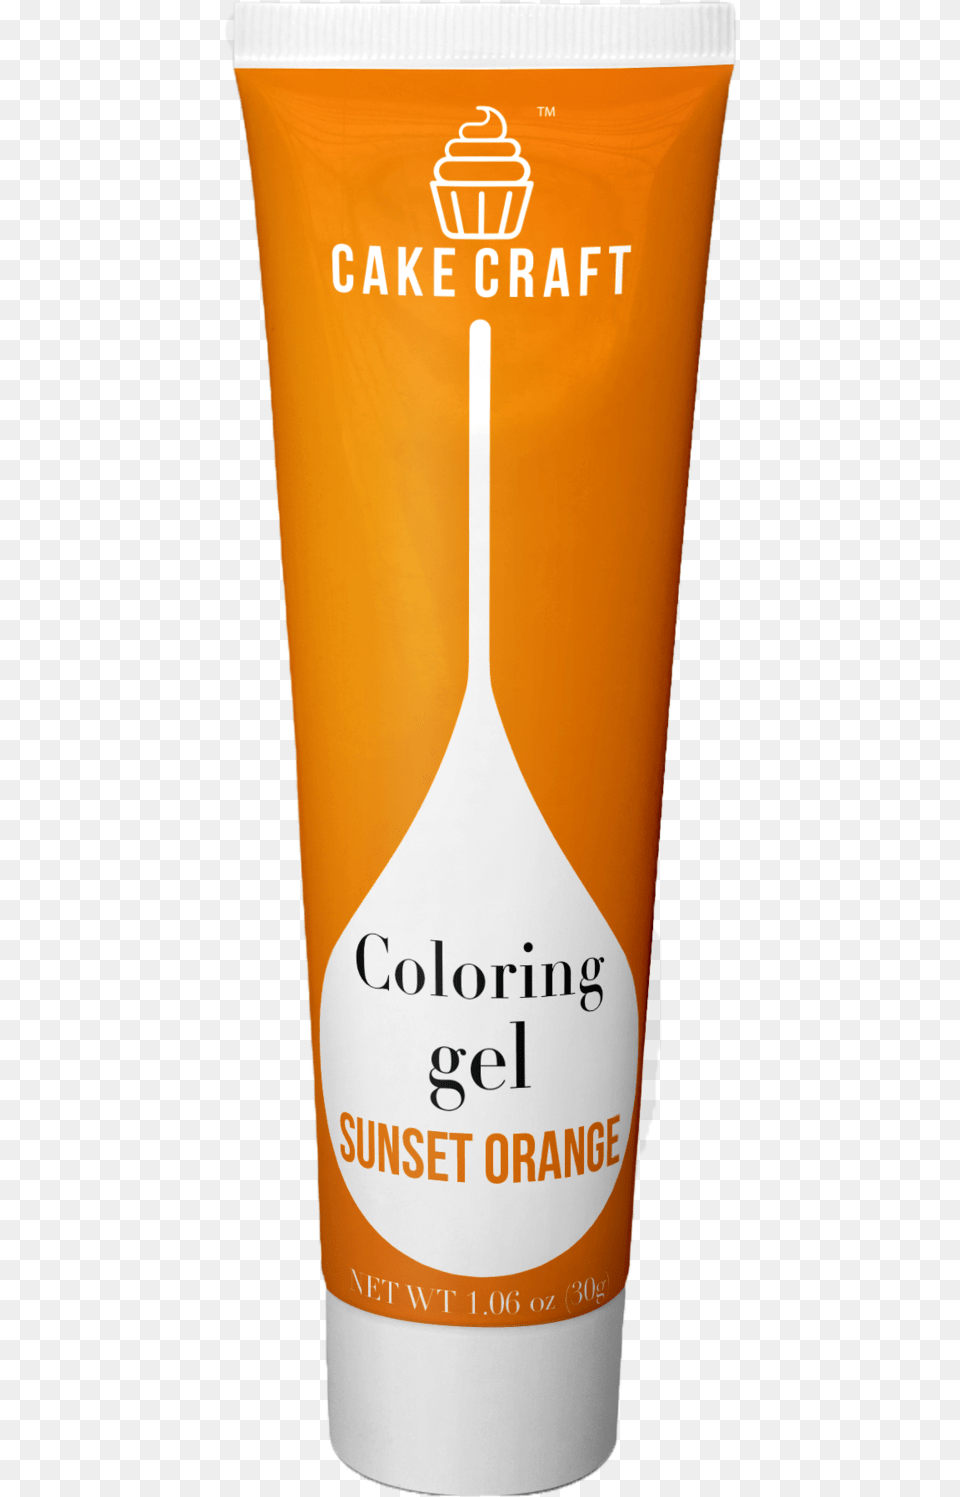 Sunset Orange Coloring Gel, Bottle, Cosmetics, Sunscreen, Alcohol Free Transparent Png